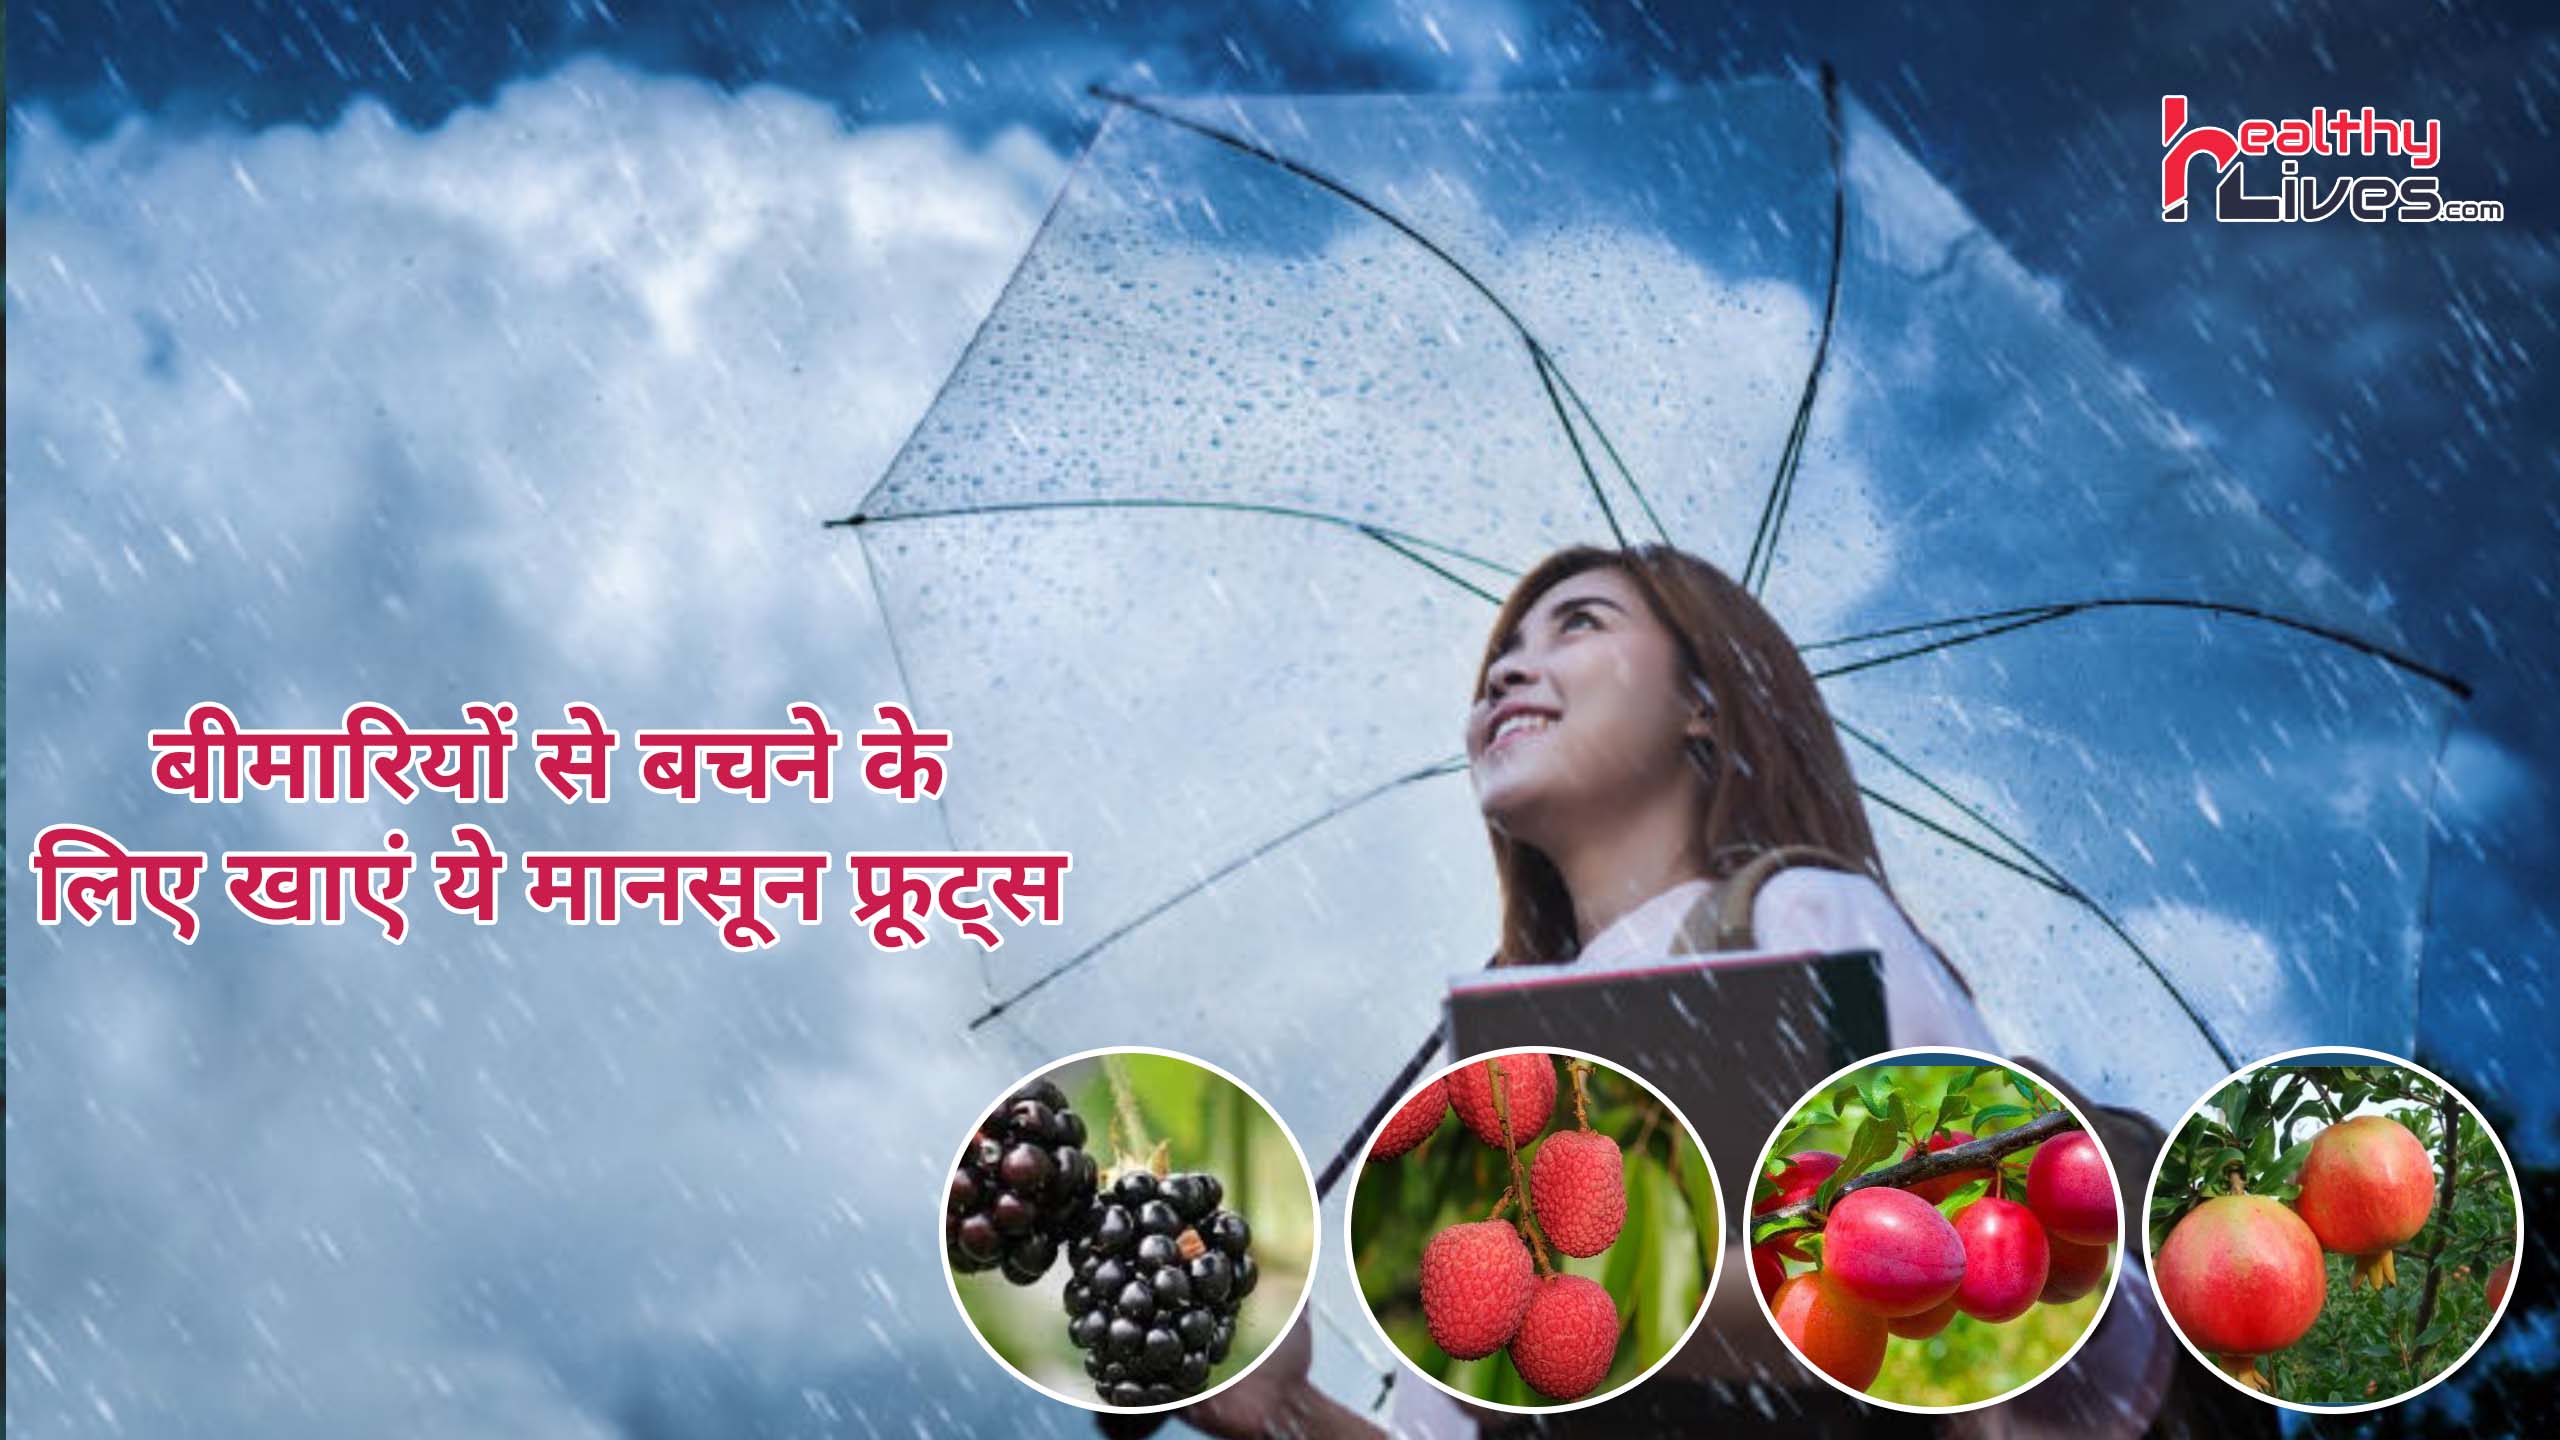 Monsoon Fruits: मानसून के दौरान खाए स्वास्थ्य के लिए लाभकारी फल